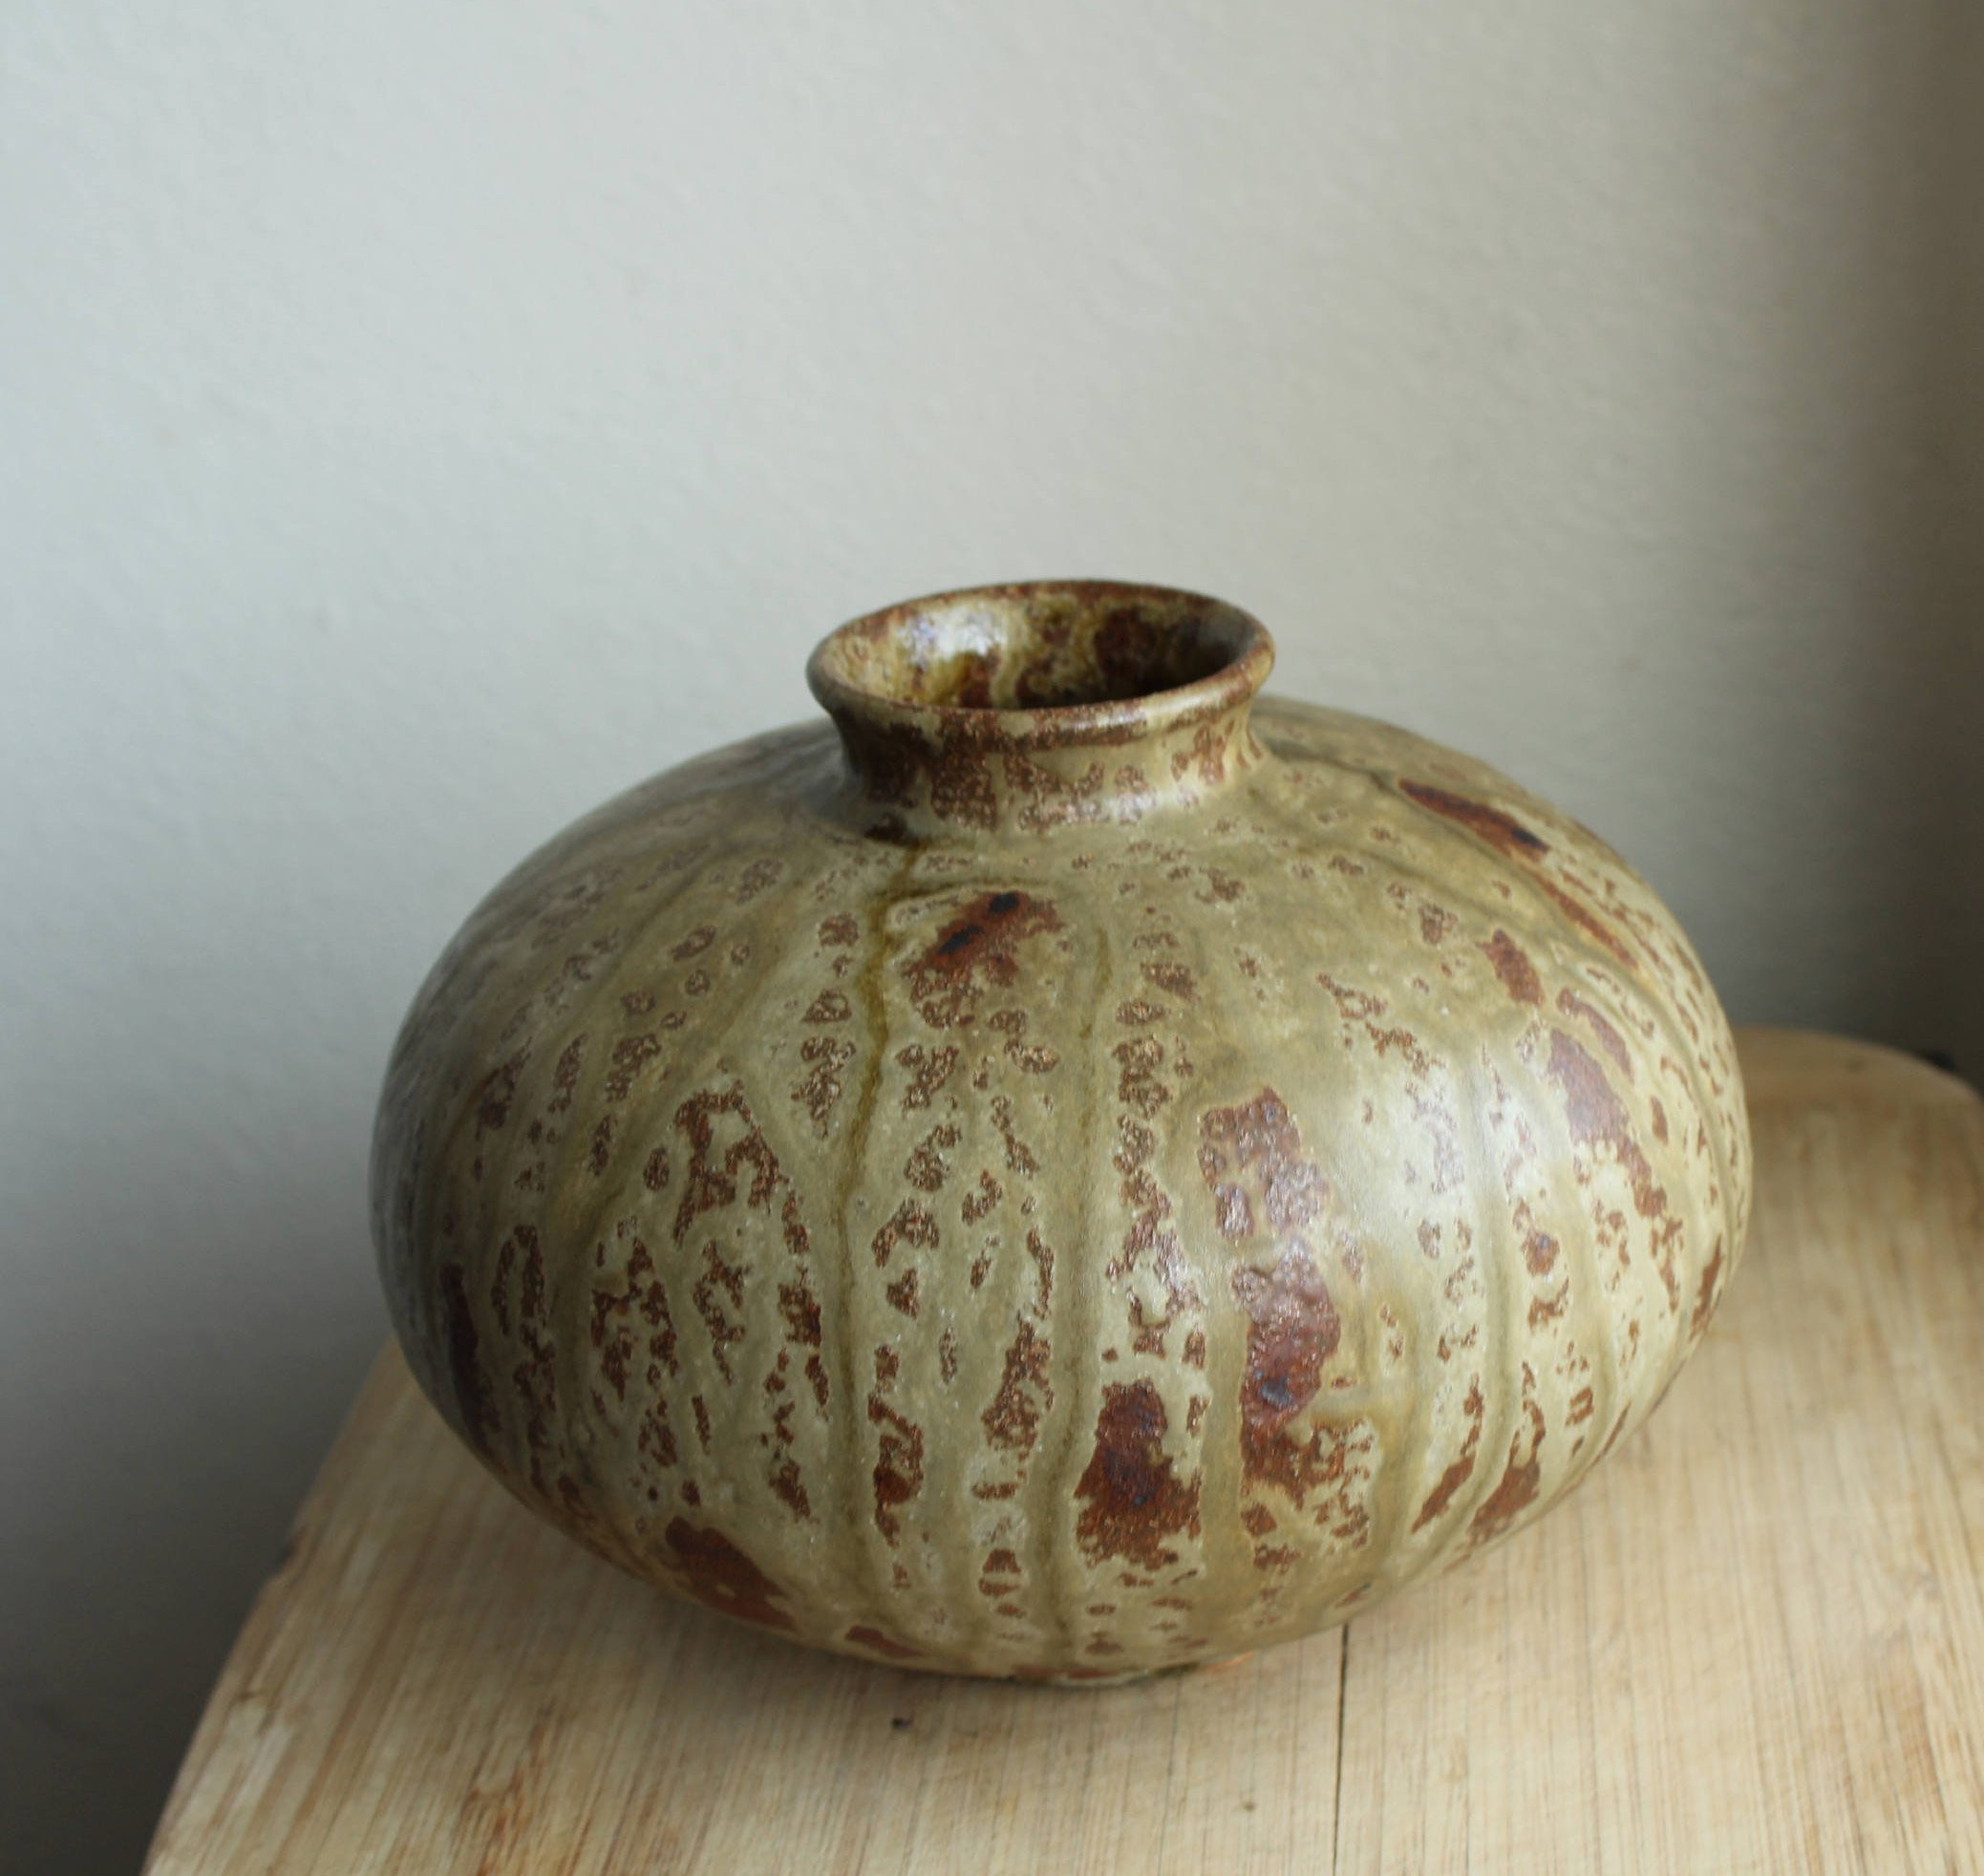 22 Recommended Antique Japanese Bronze Vase 2023 free download antique japanese bronze vase of pottery vase vintage ceramic flower vase in dc29fc294c28ezoom